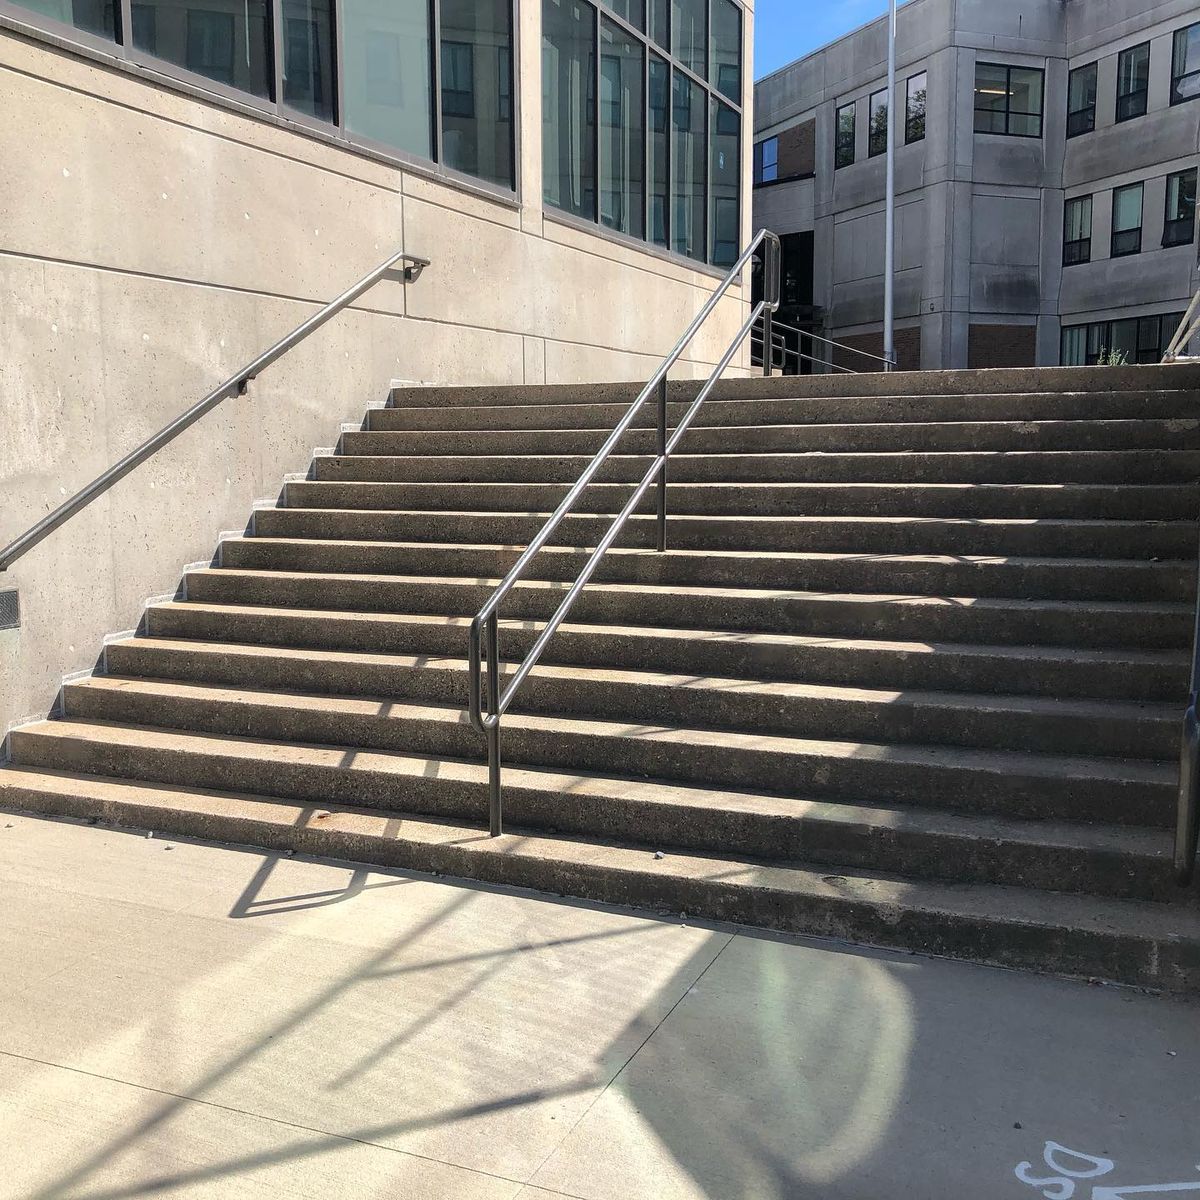 Image for skate spot Roxbury Library - 13 Stair Rail